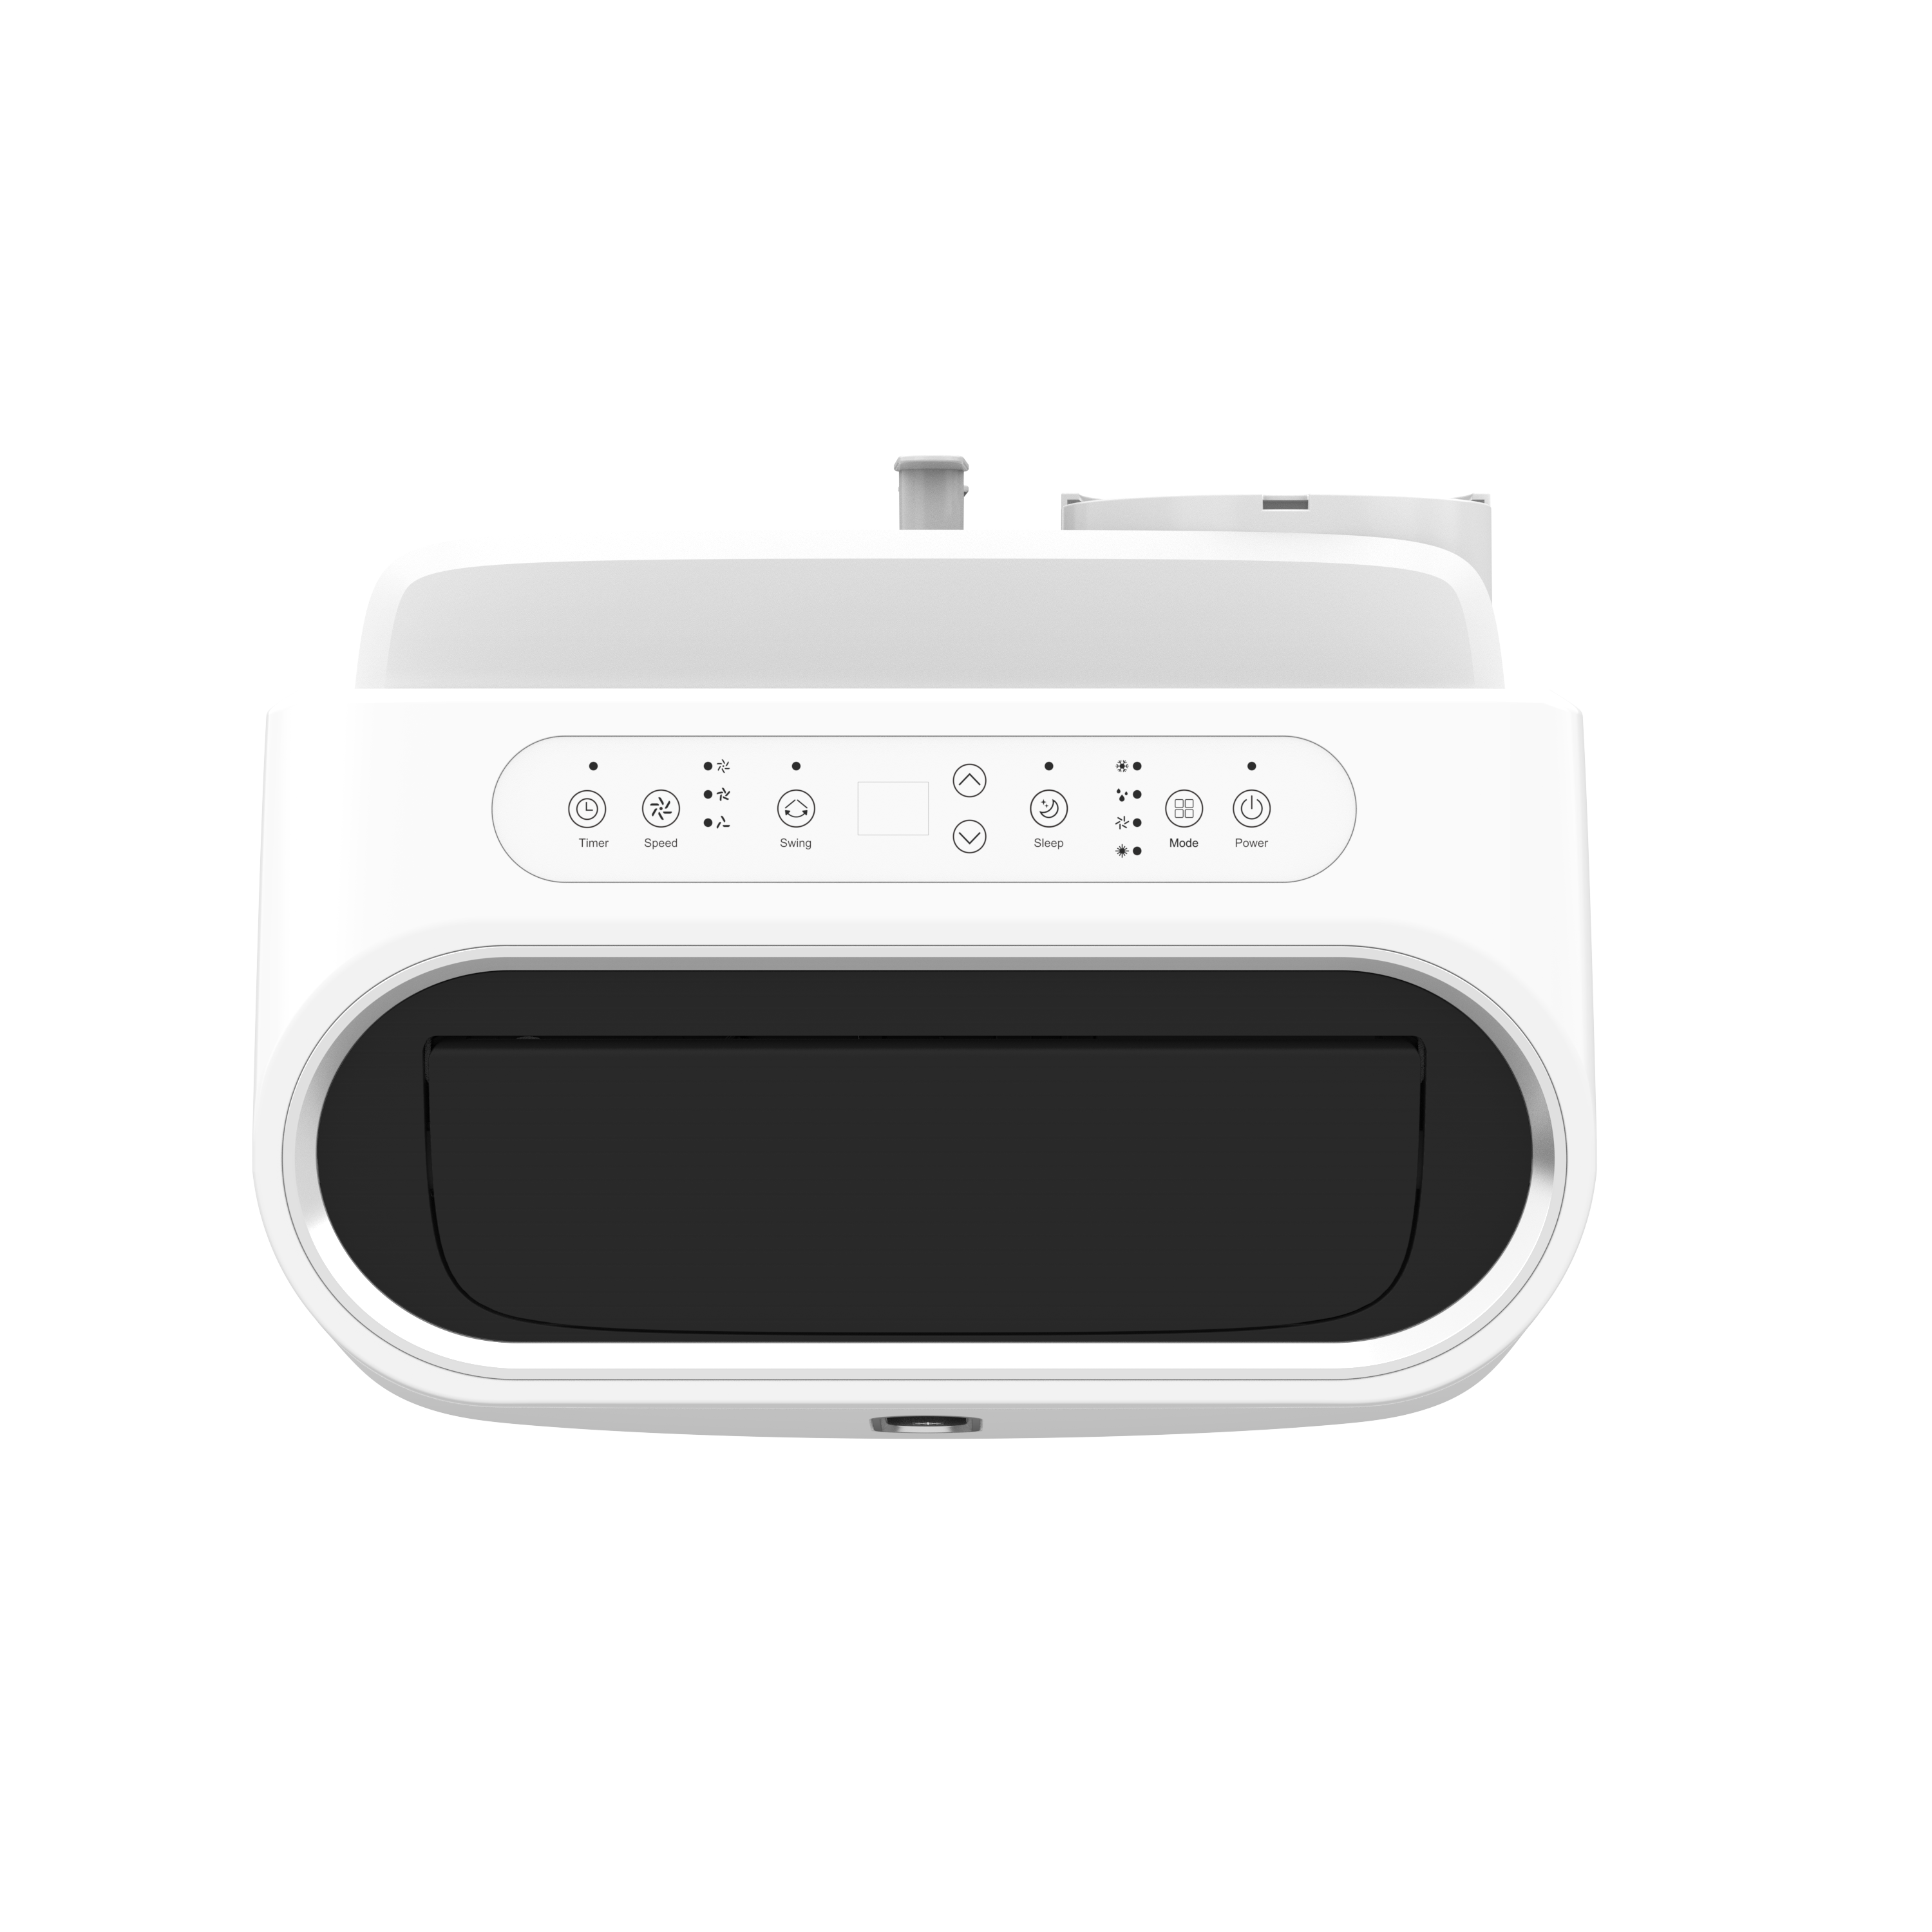 MeacoCool MC Series Pro 14000 BTU Portable Air Conditioner